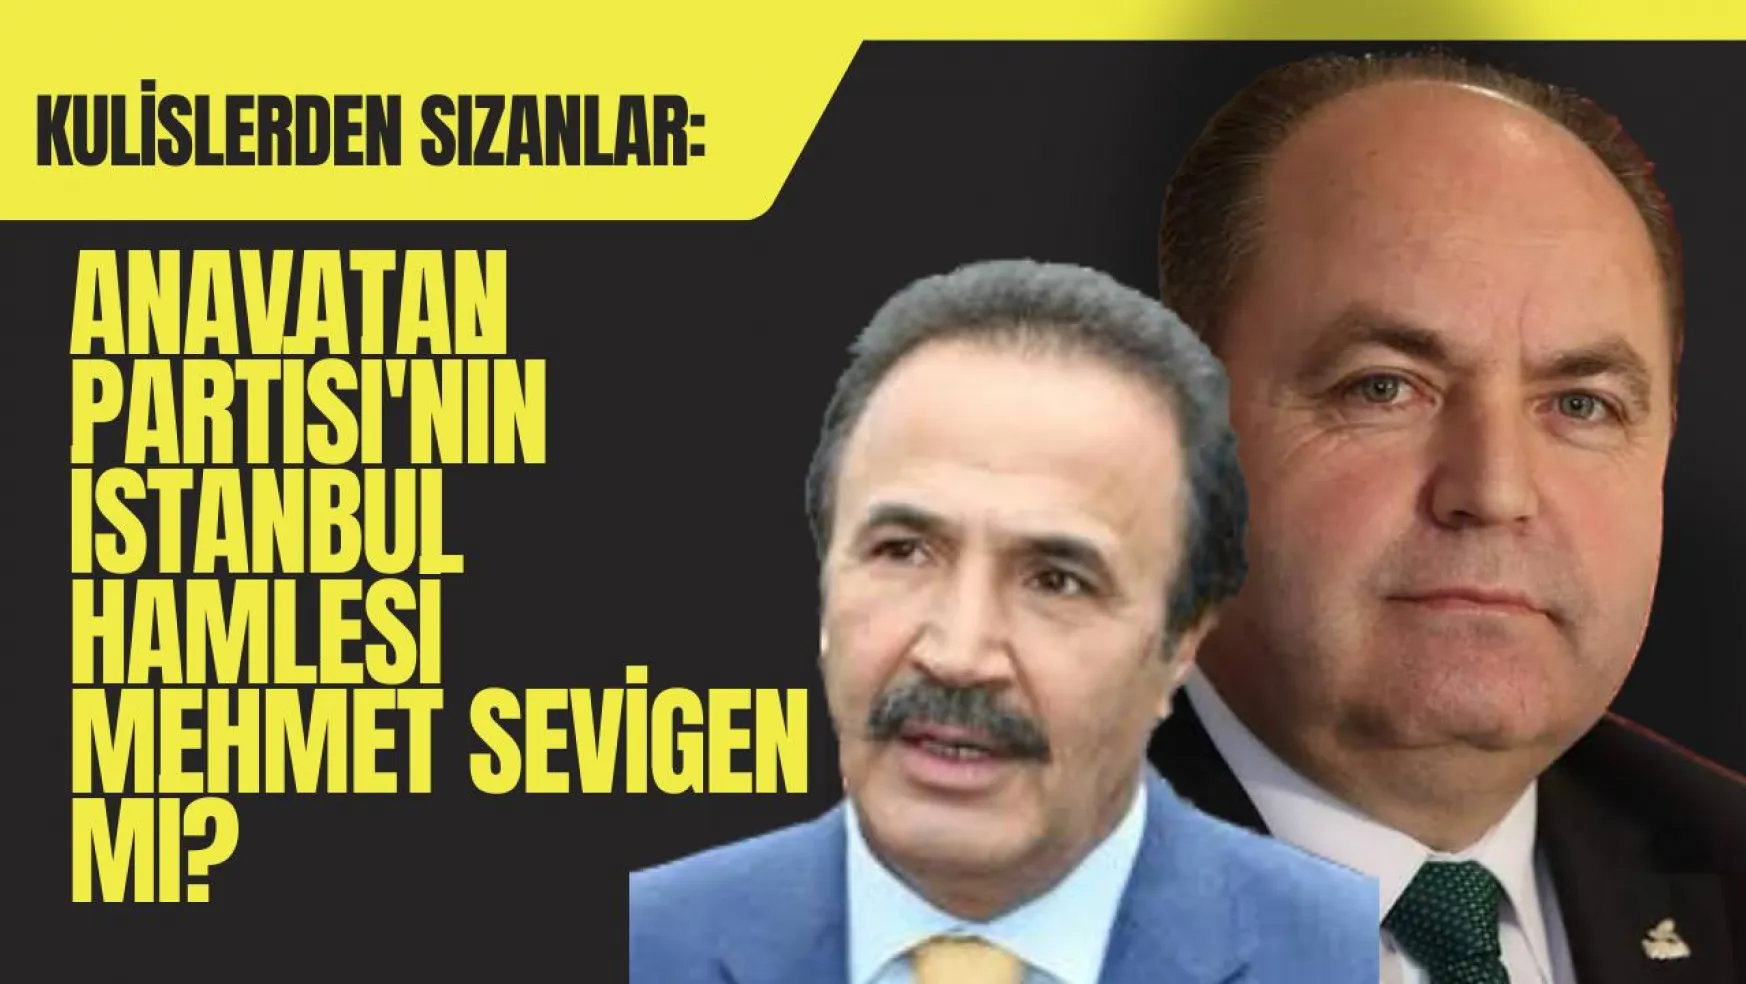 Mehmet Sevigen Anavatan Partisi'nin İstanbul Adayı mı?